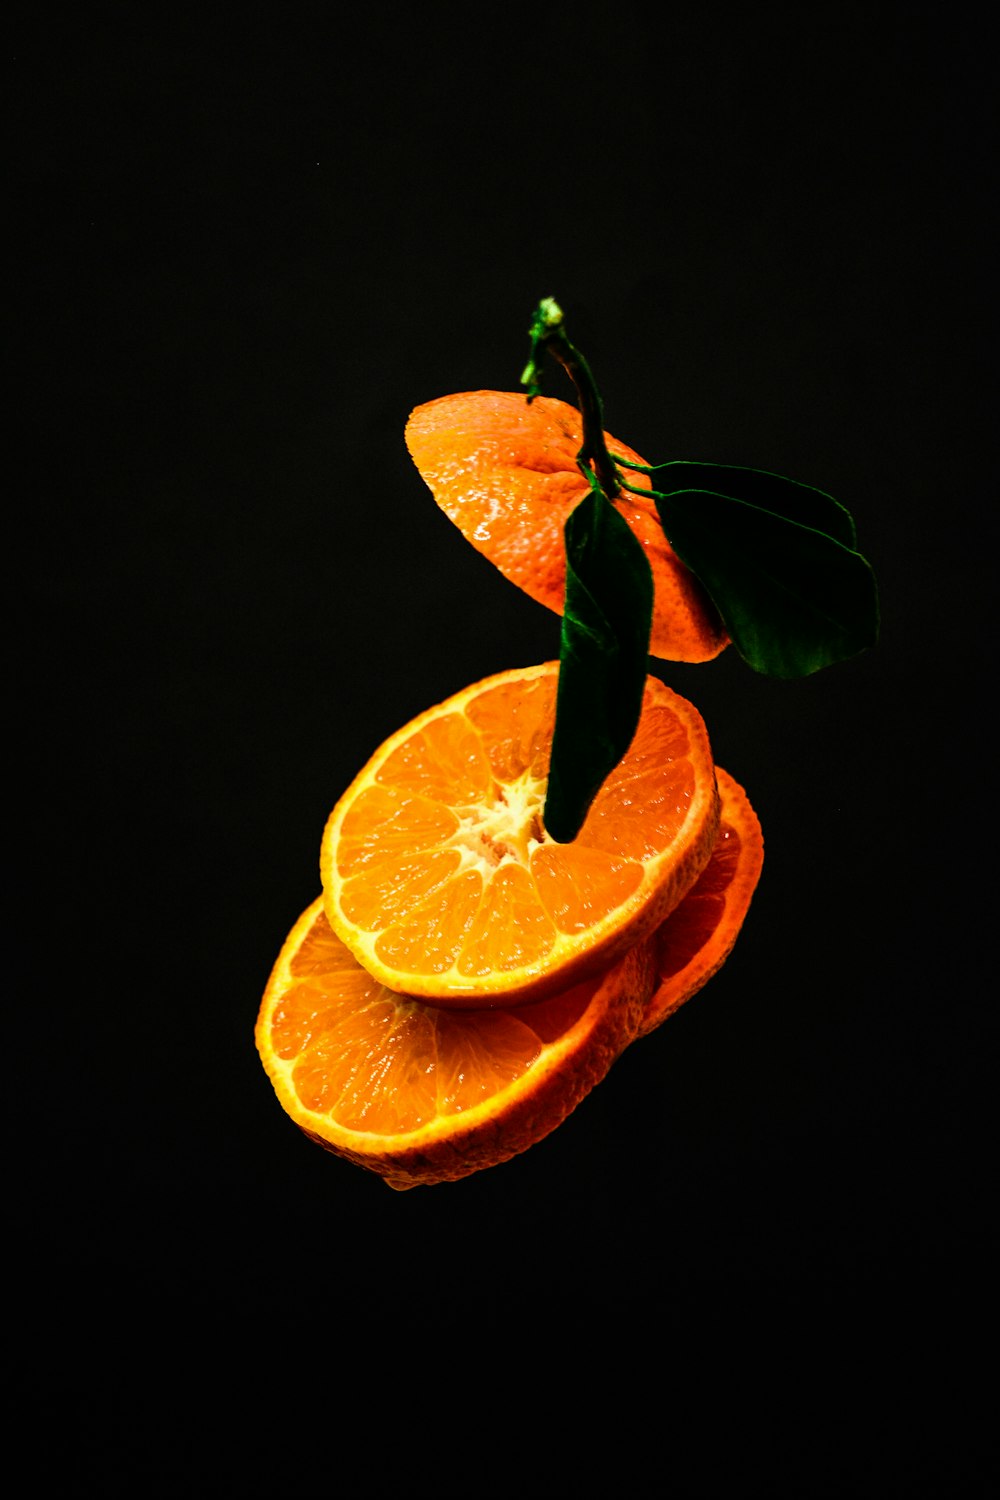 sliced orange fruit with black background